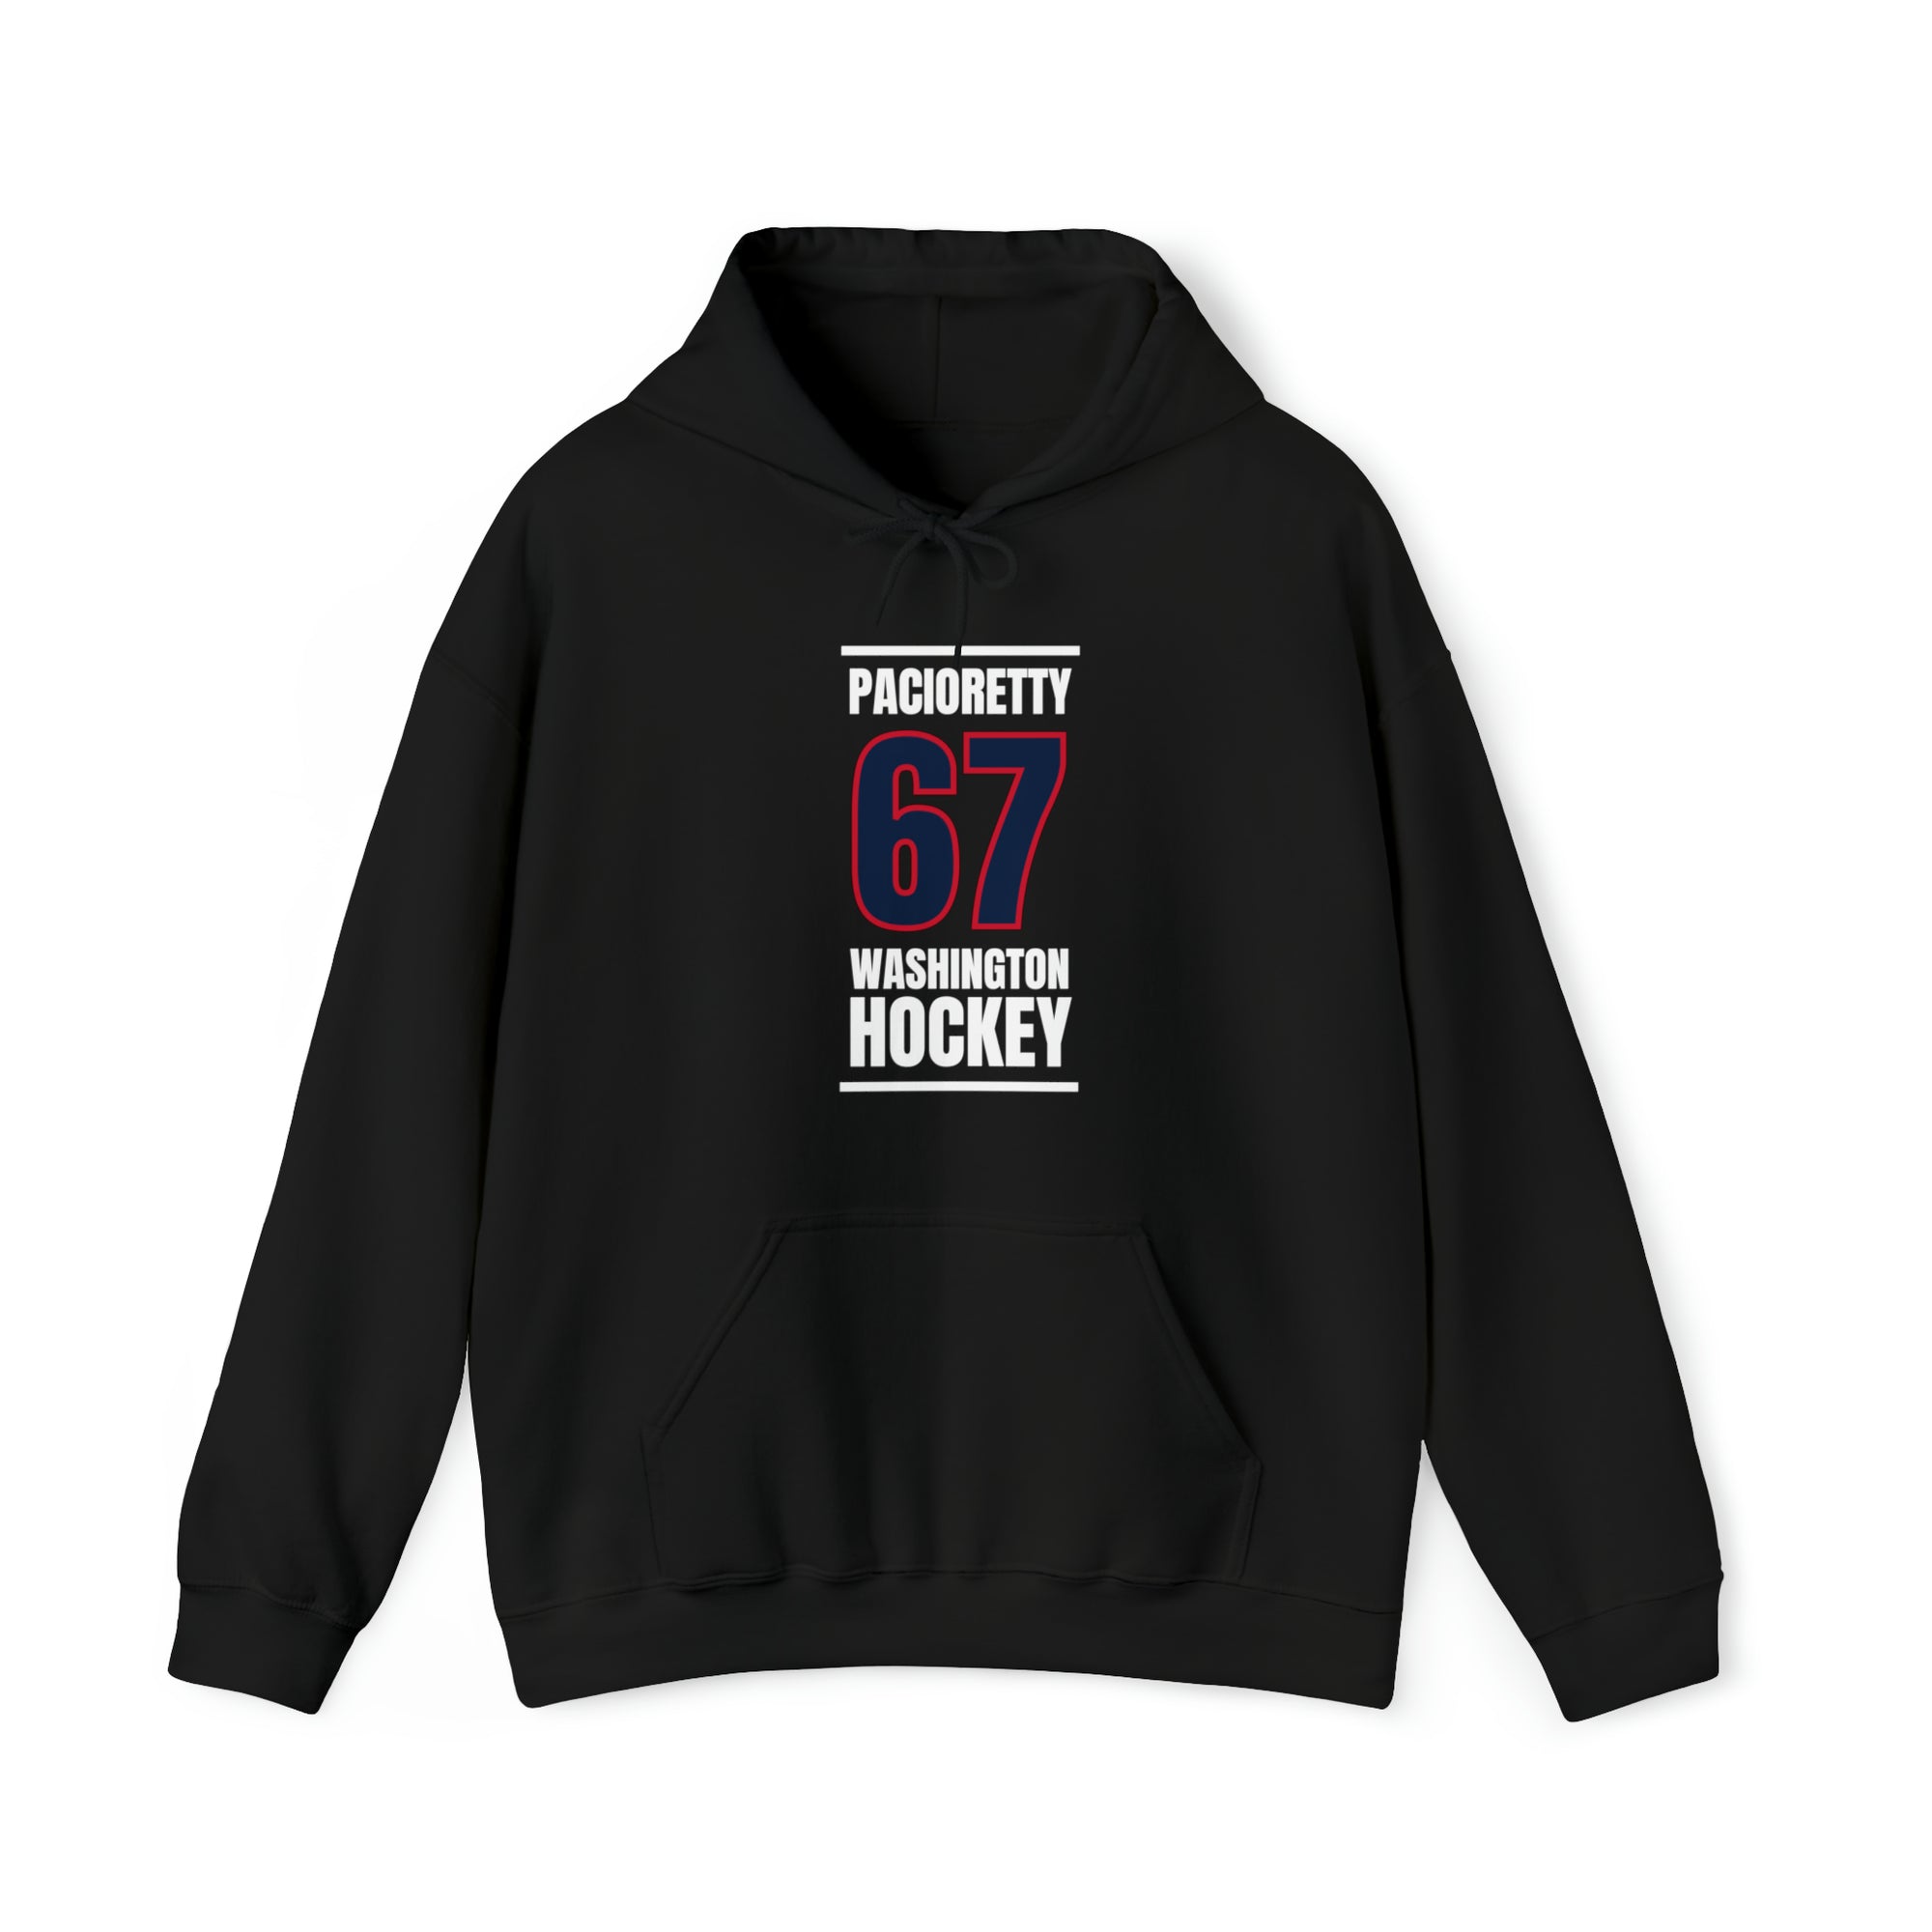 Pacioretty 67 Washington Hockey Navy Vertical Design Unisex Hooded Sweatshirt